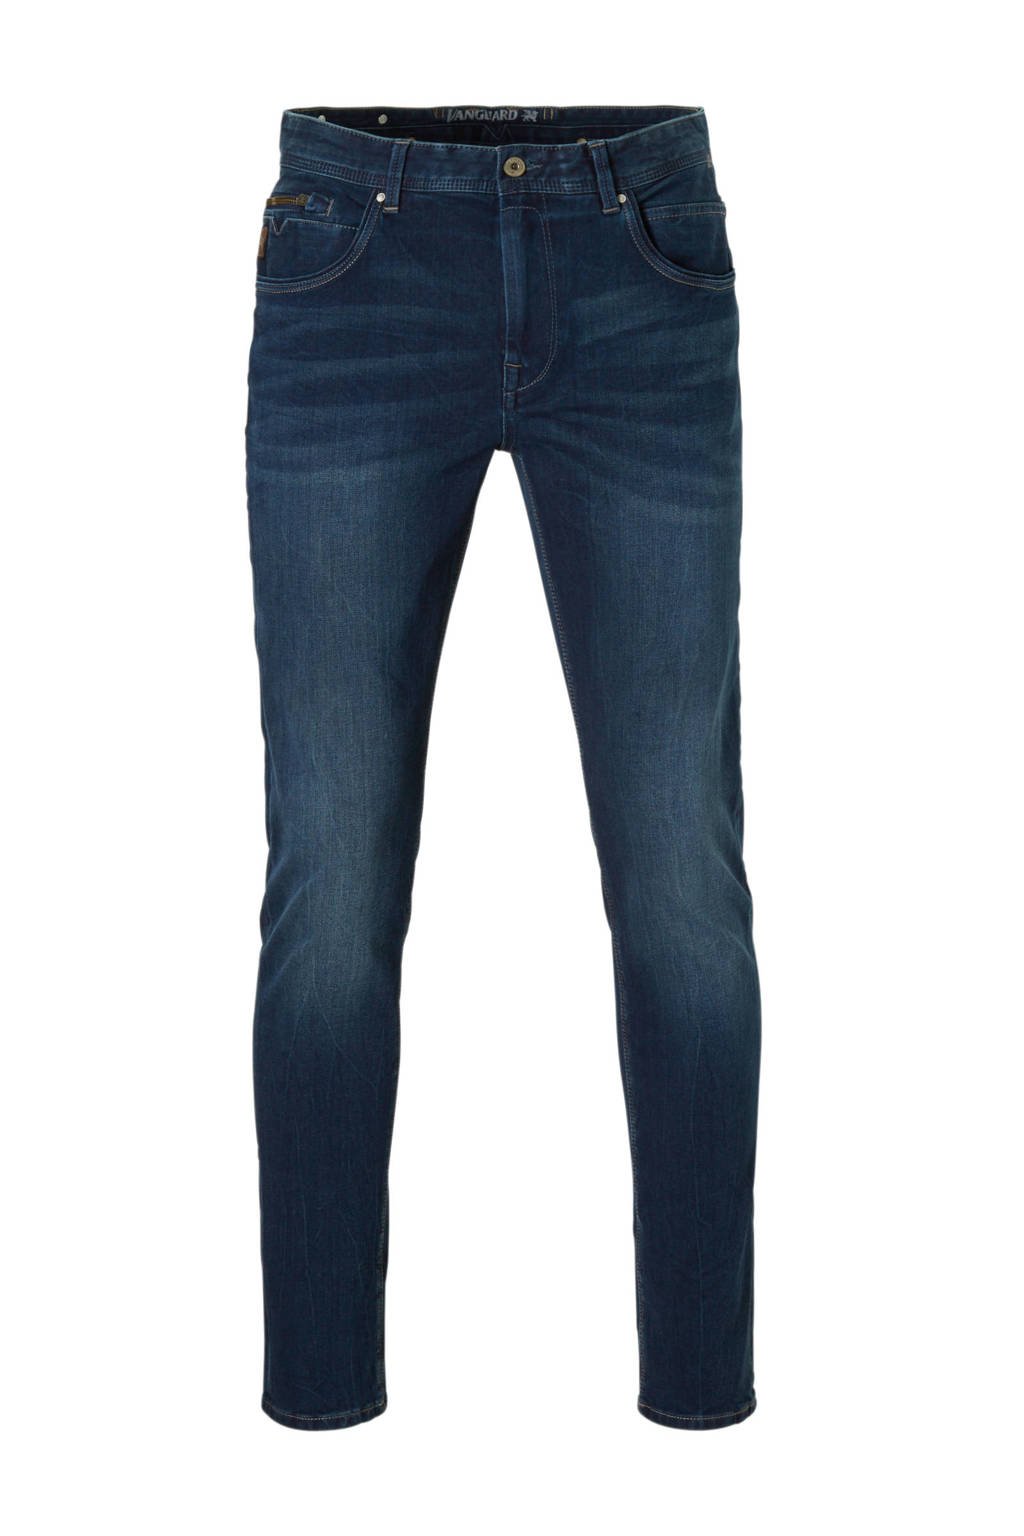 Ale koel ketting Vanguard slim fit jeans V850 | wehkamp